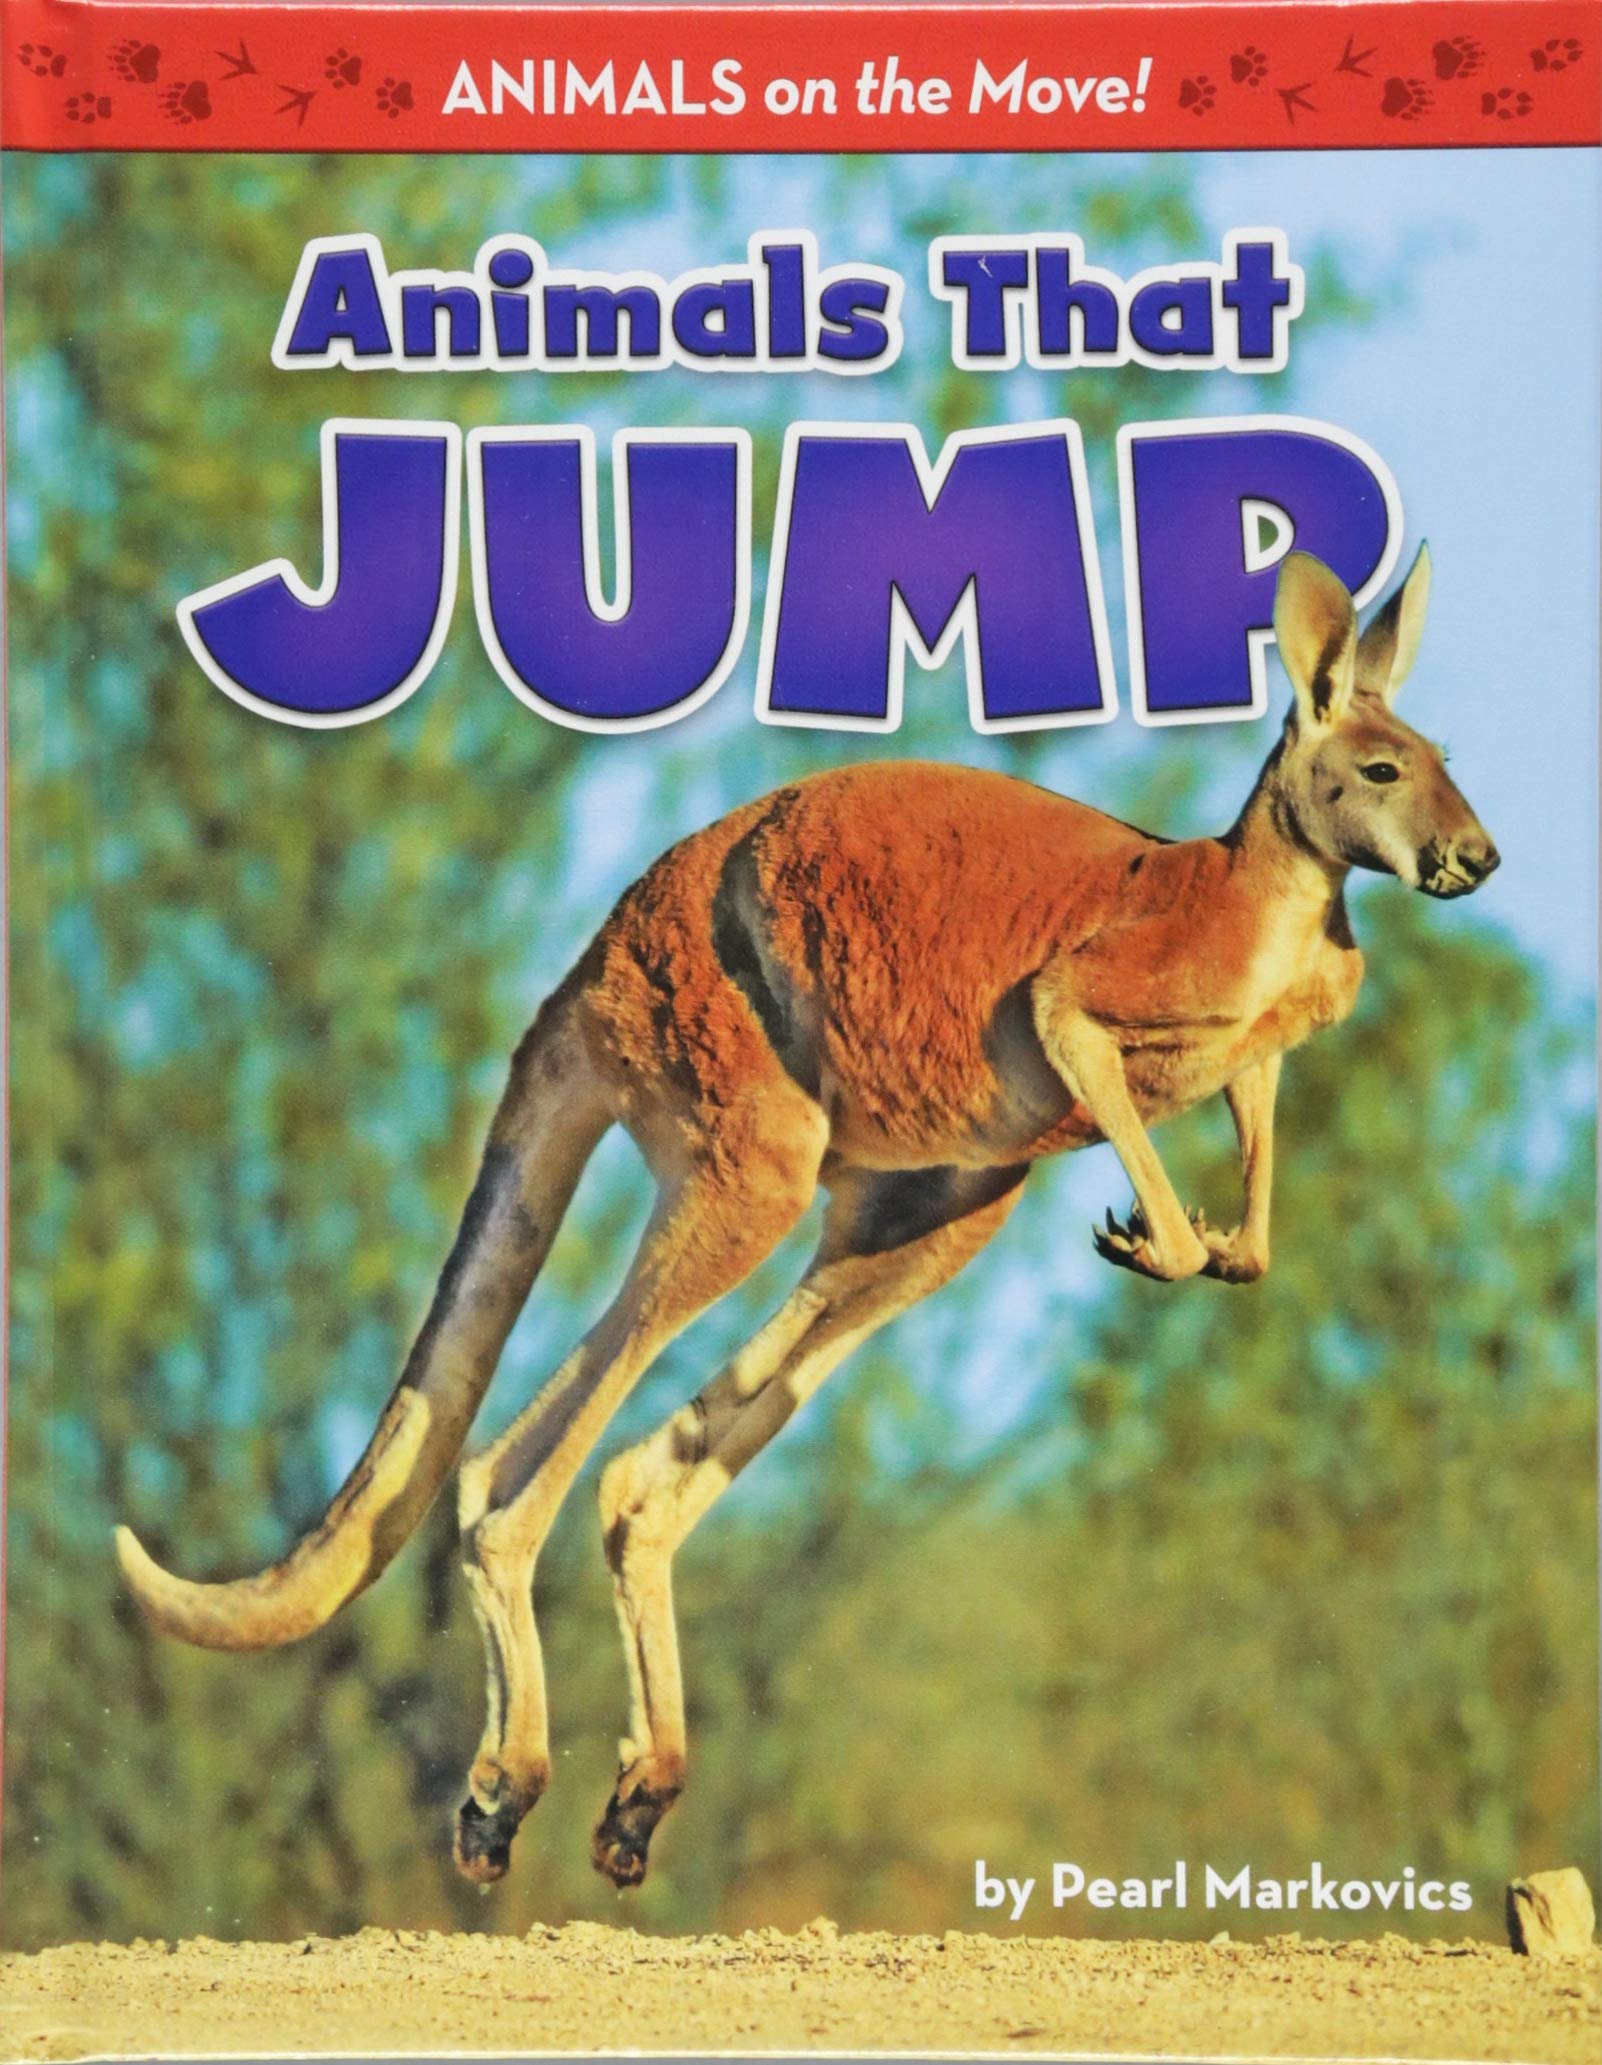 What animals jump?